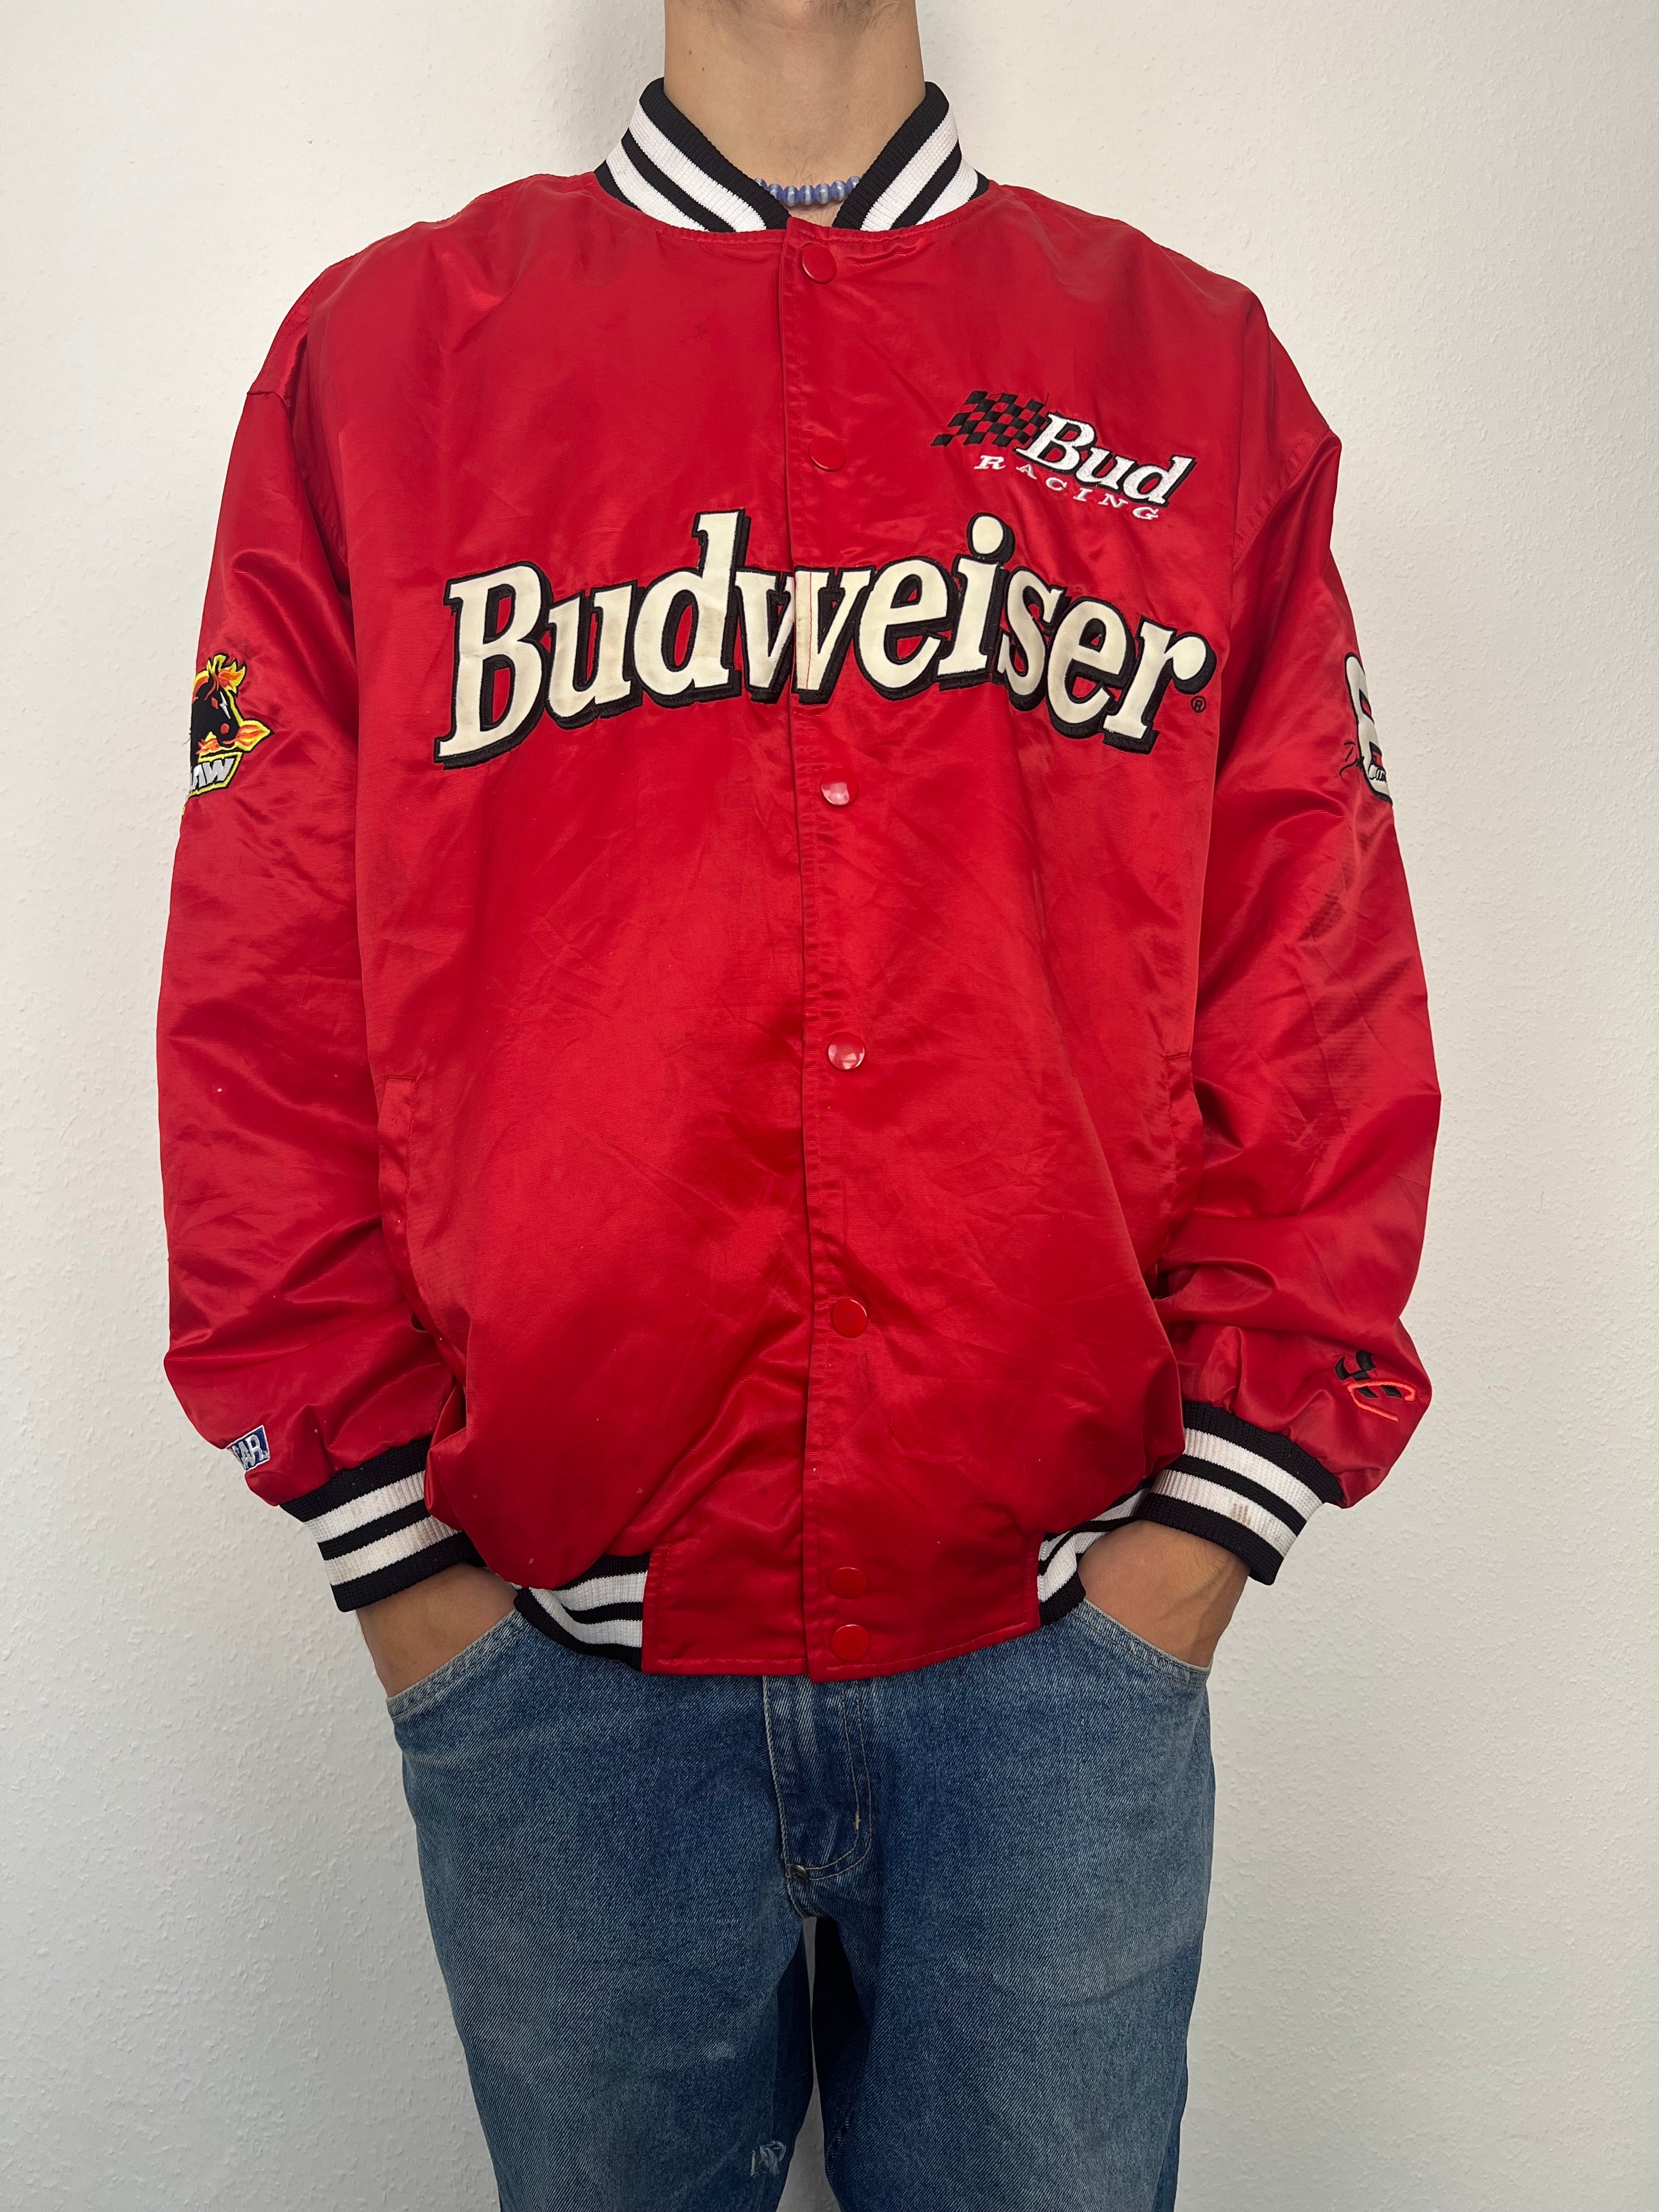 Vintage 90s Nascar Budweiser Racing College Jacket (XL)